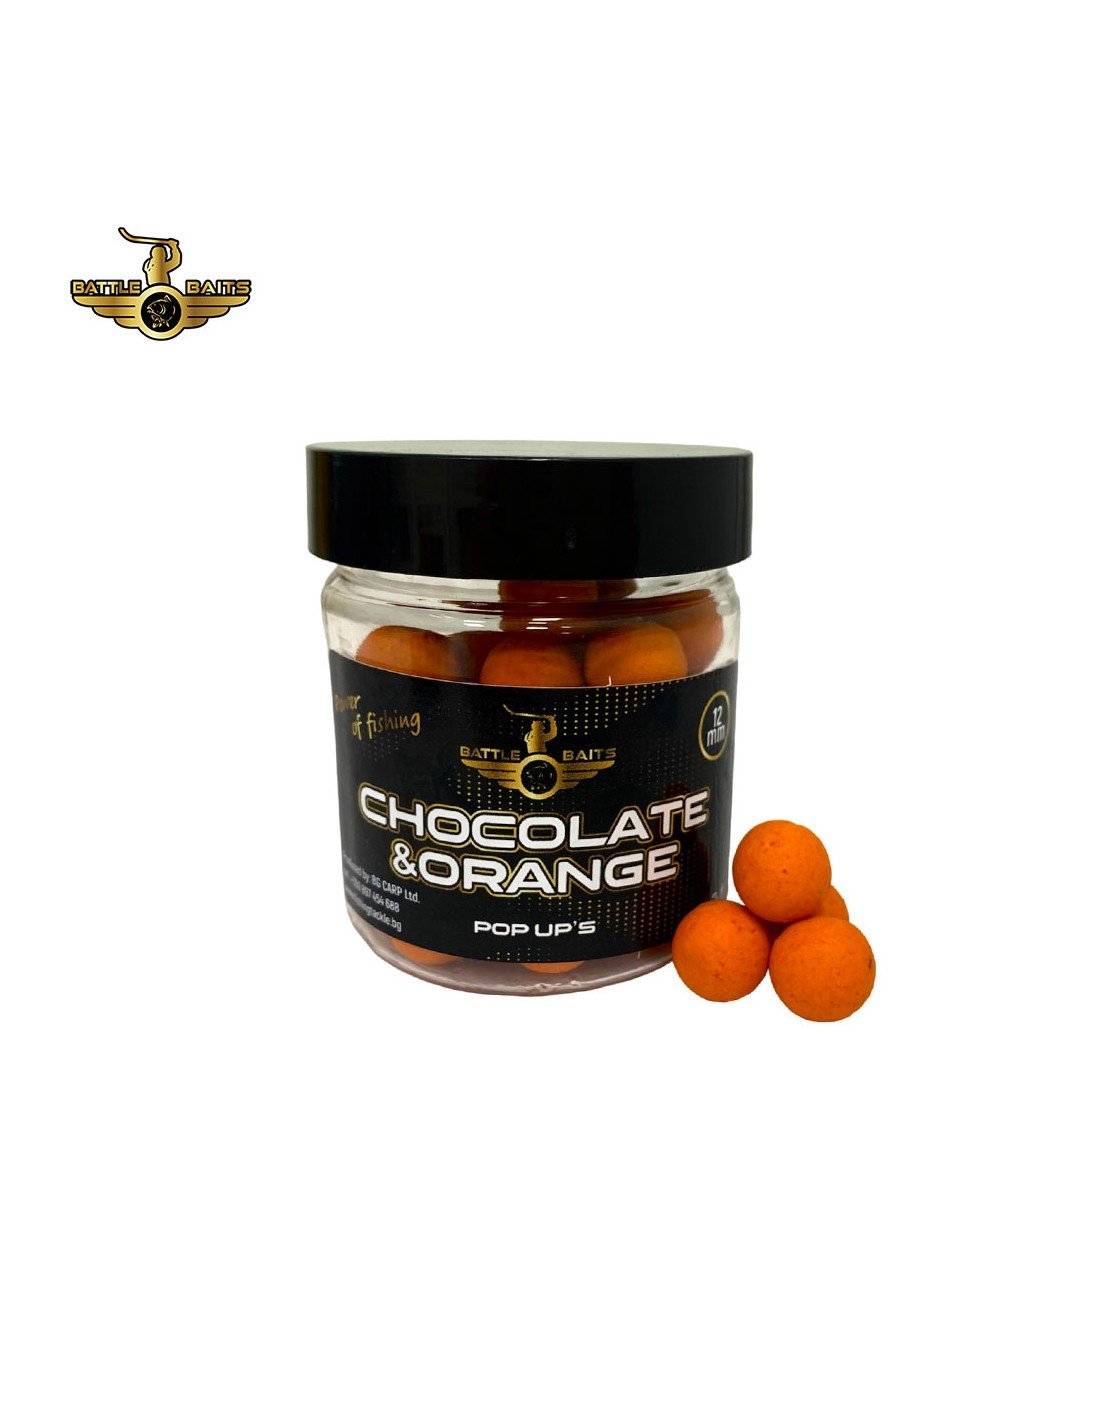 BATTLE BAITS Chocolate & Orange Портокал и шоколад 12mm поп ъп топчета